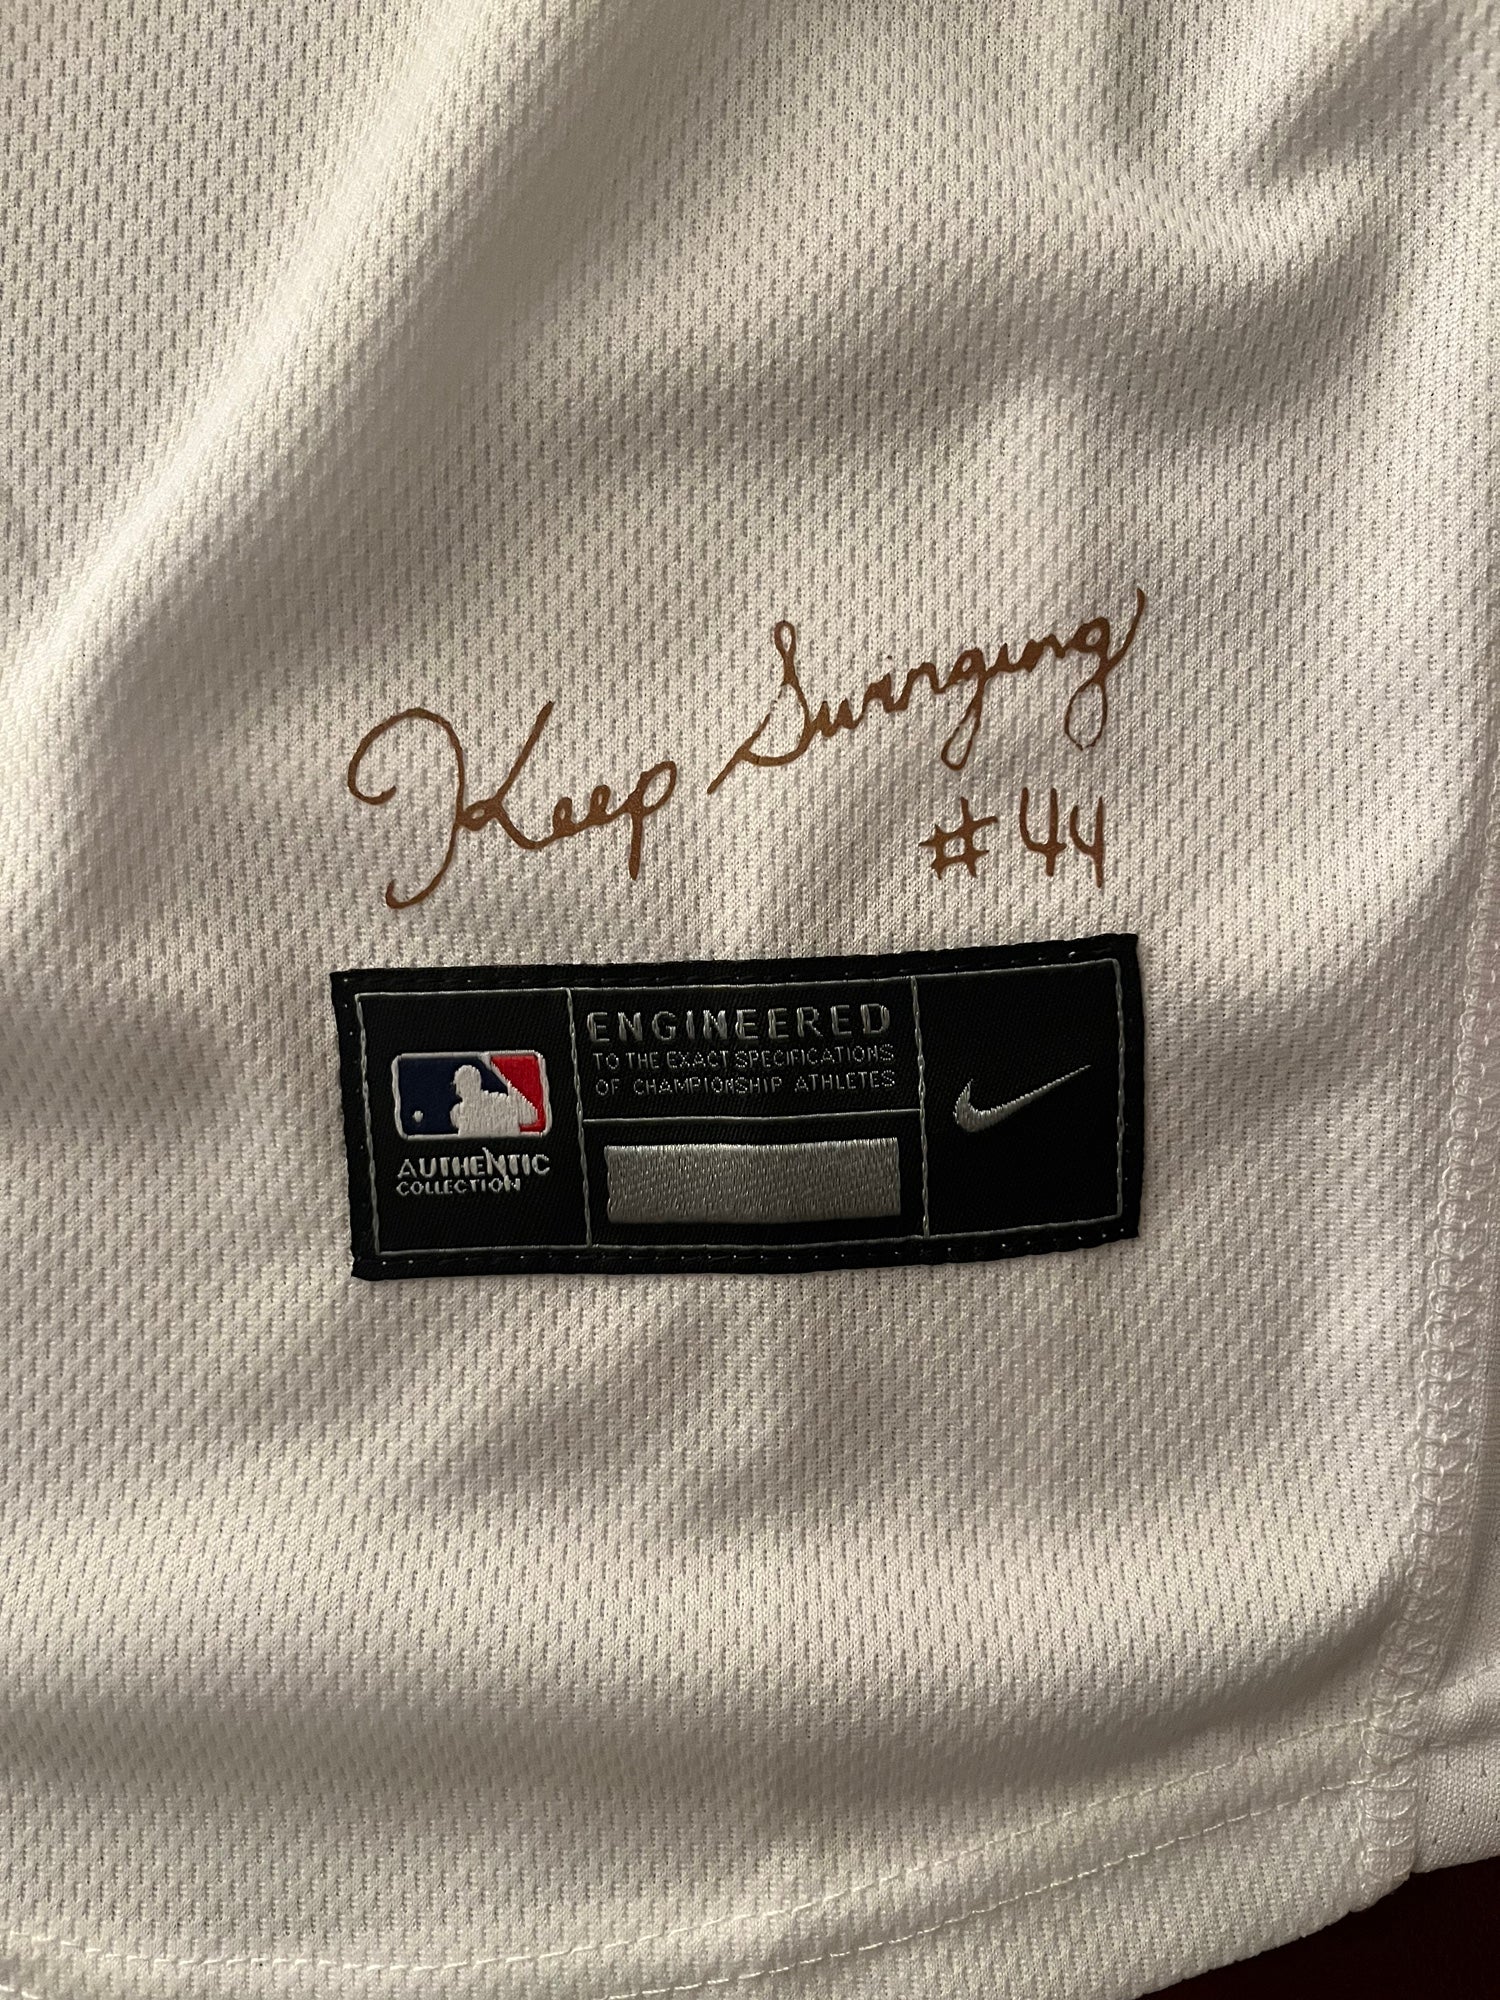 2021 World Series Champions Ronald Acuña Jr jersey for sale. Size 2XL. $150  : r/baseballunis